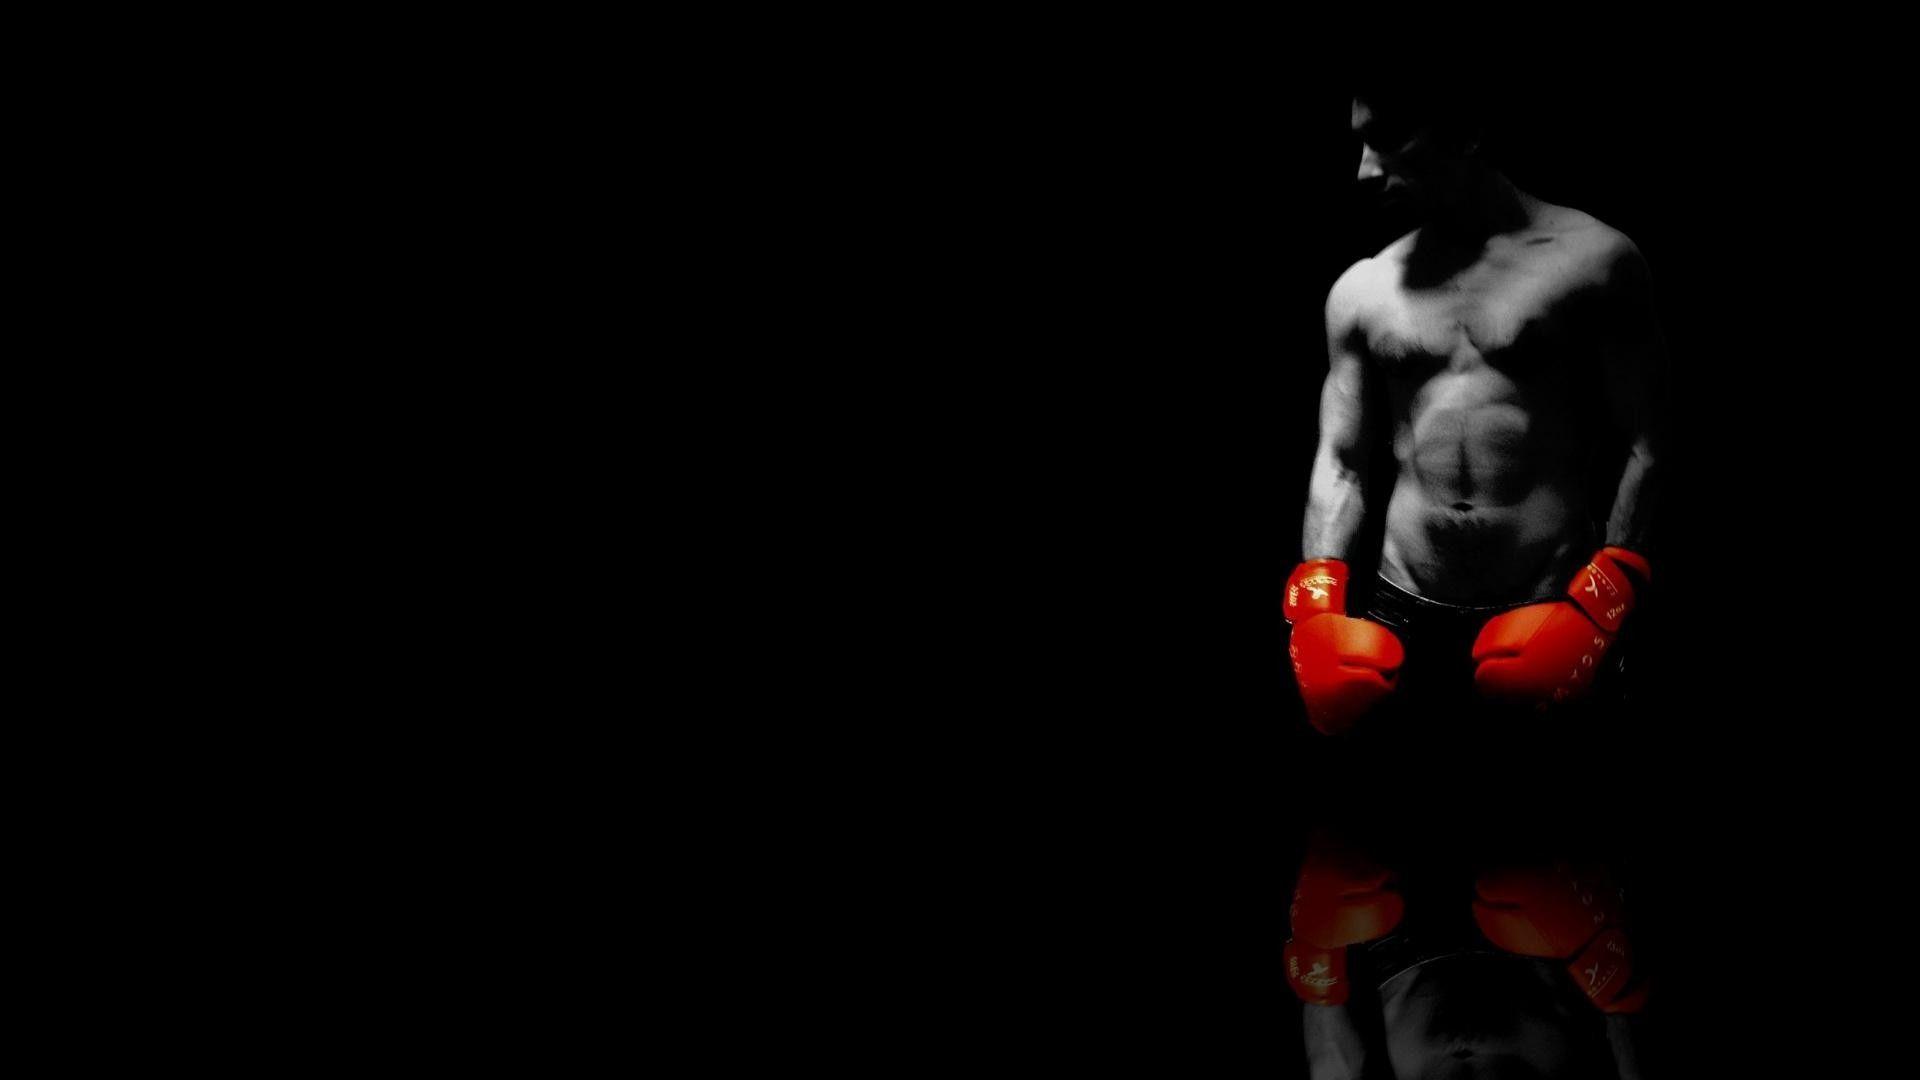 1284 Boxing Gloves Wallpaper Images Stock Photos  Vectors  Shutterstock